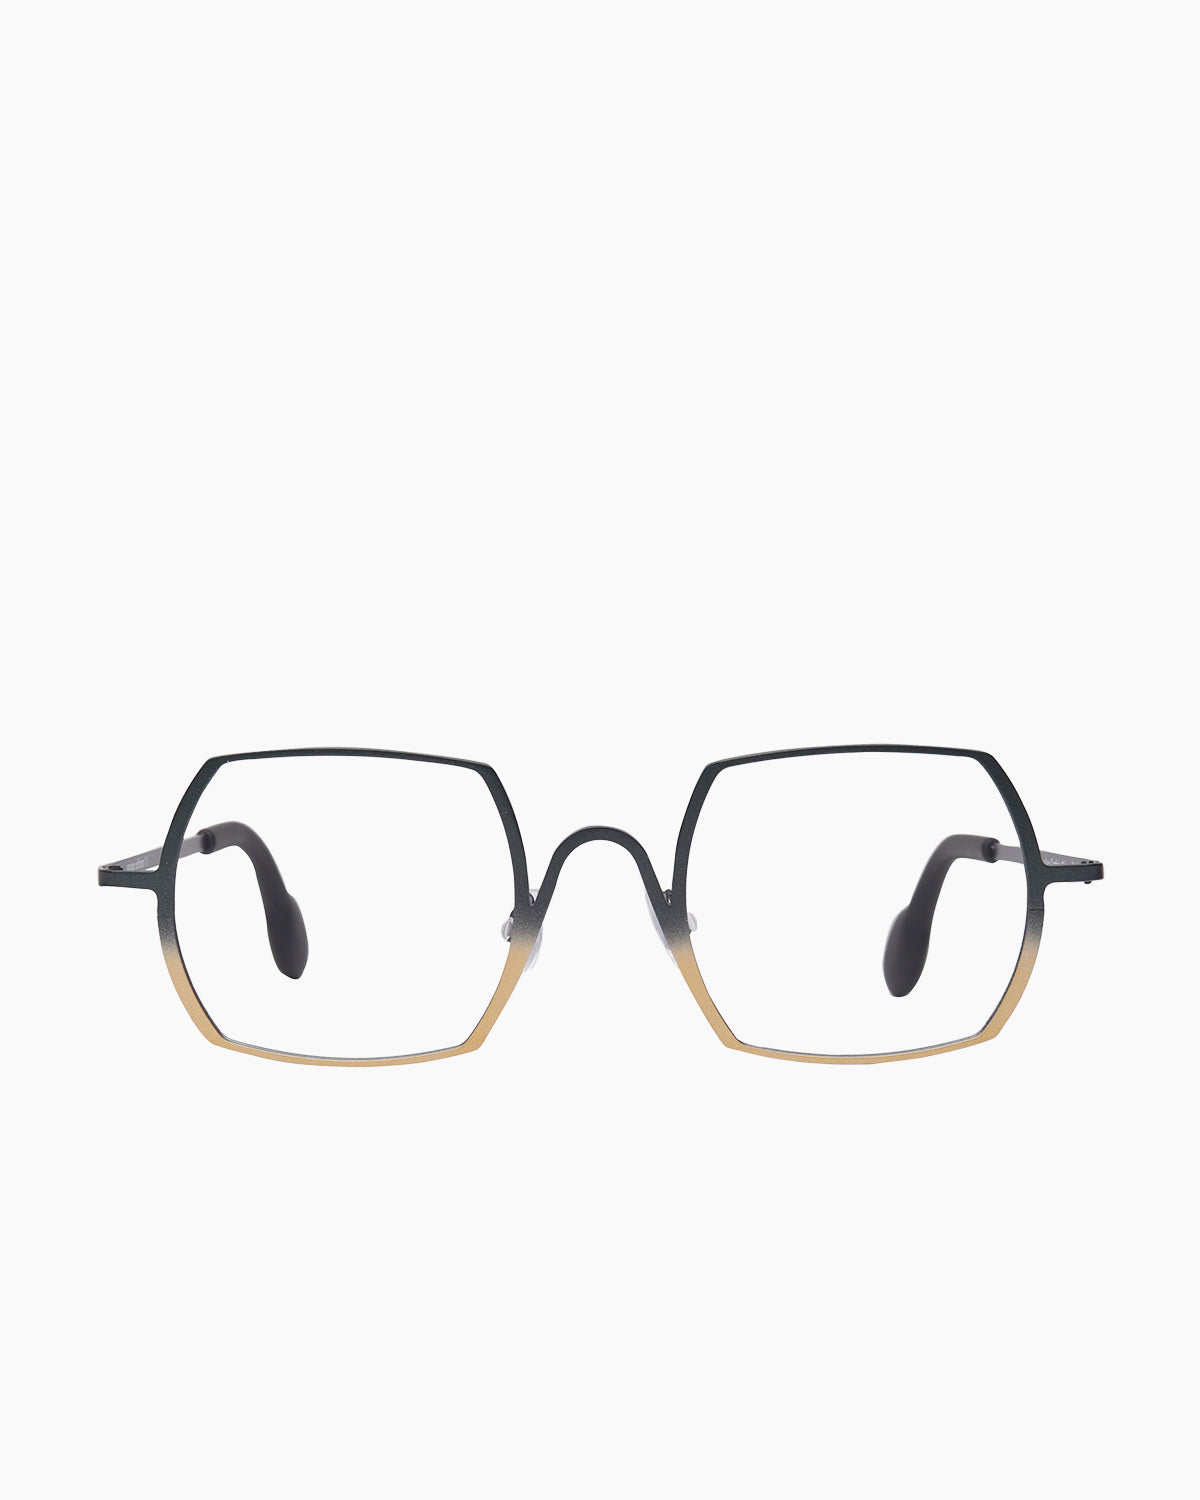 Theo - Cambria - 463 | glasses bar